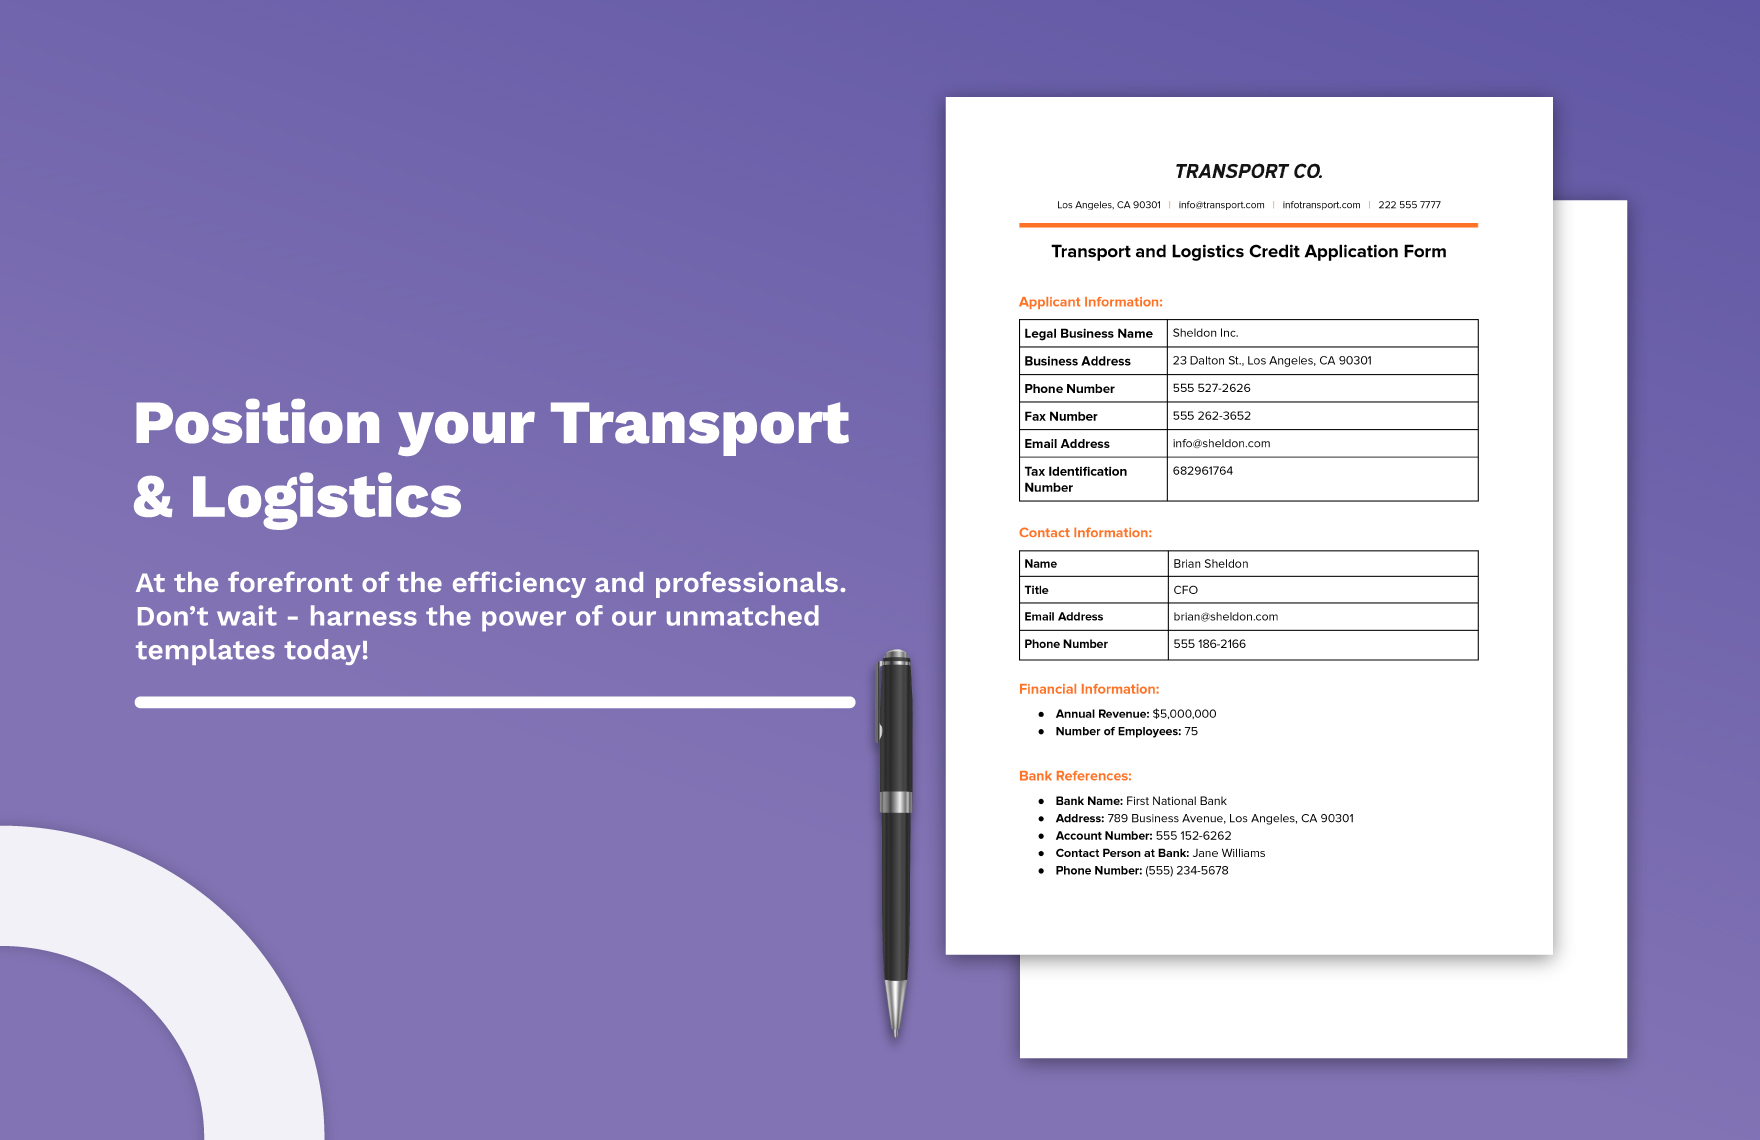 Transport and Logistics Credit Application Form Template